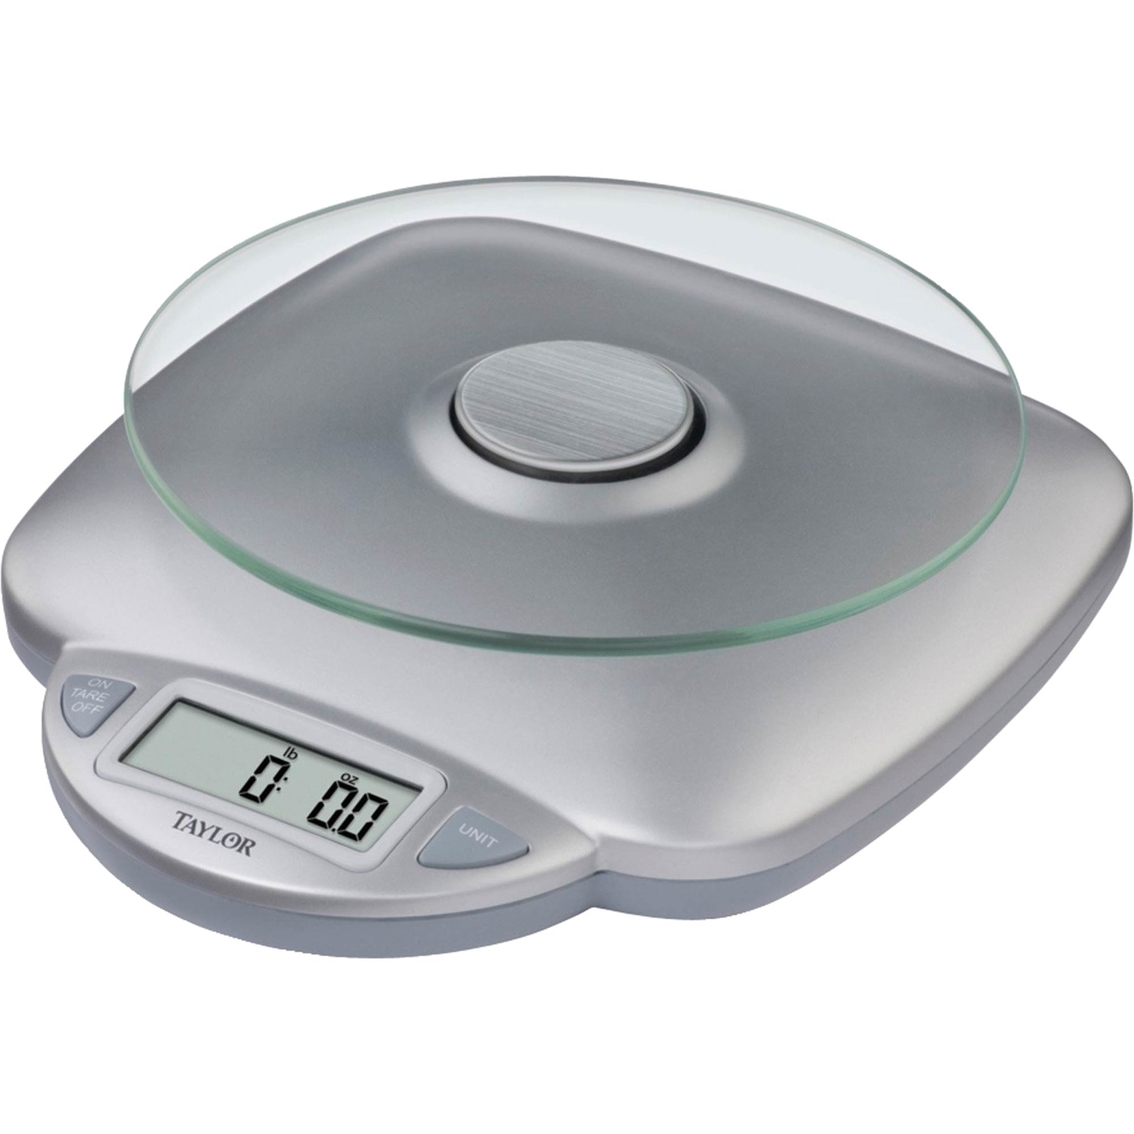 Taylor 11lb Digital Kitchen Scale, Measuring Tools